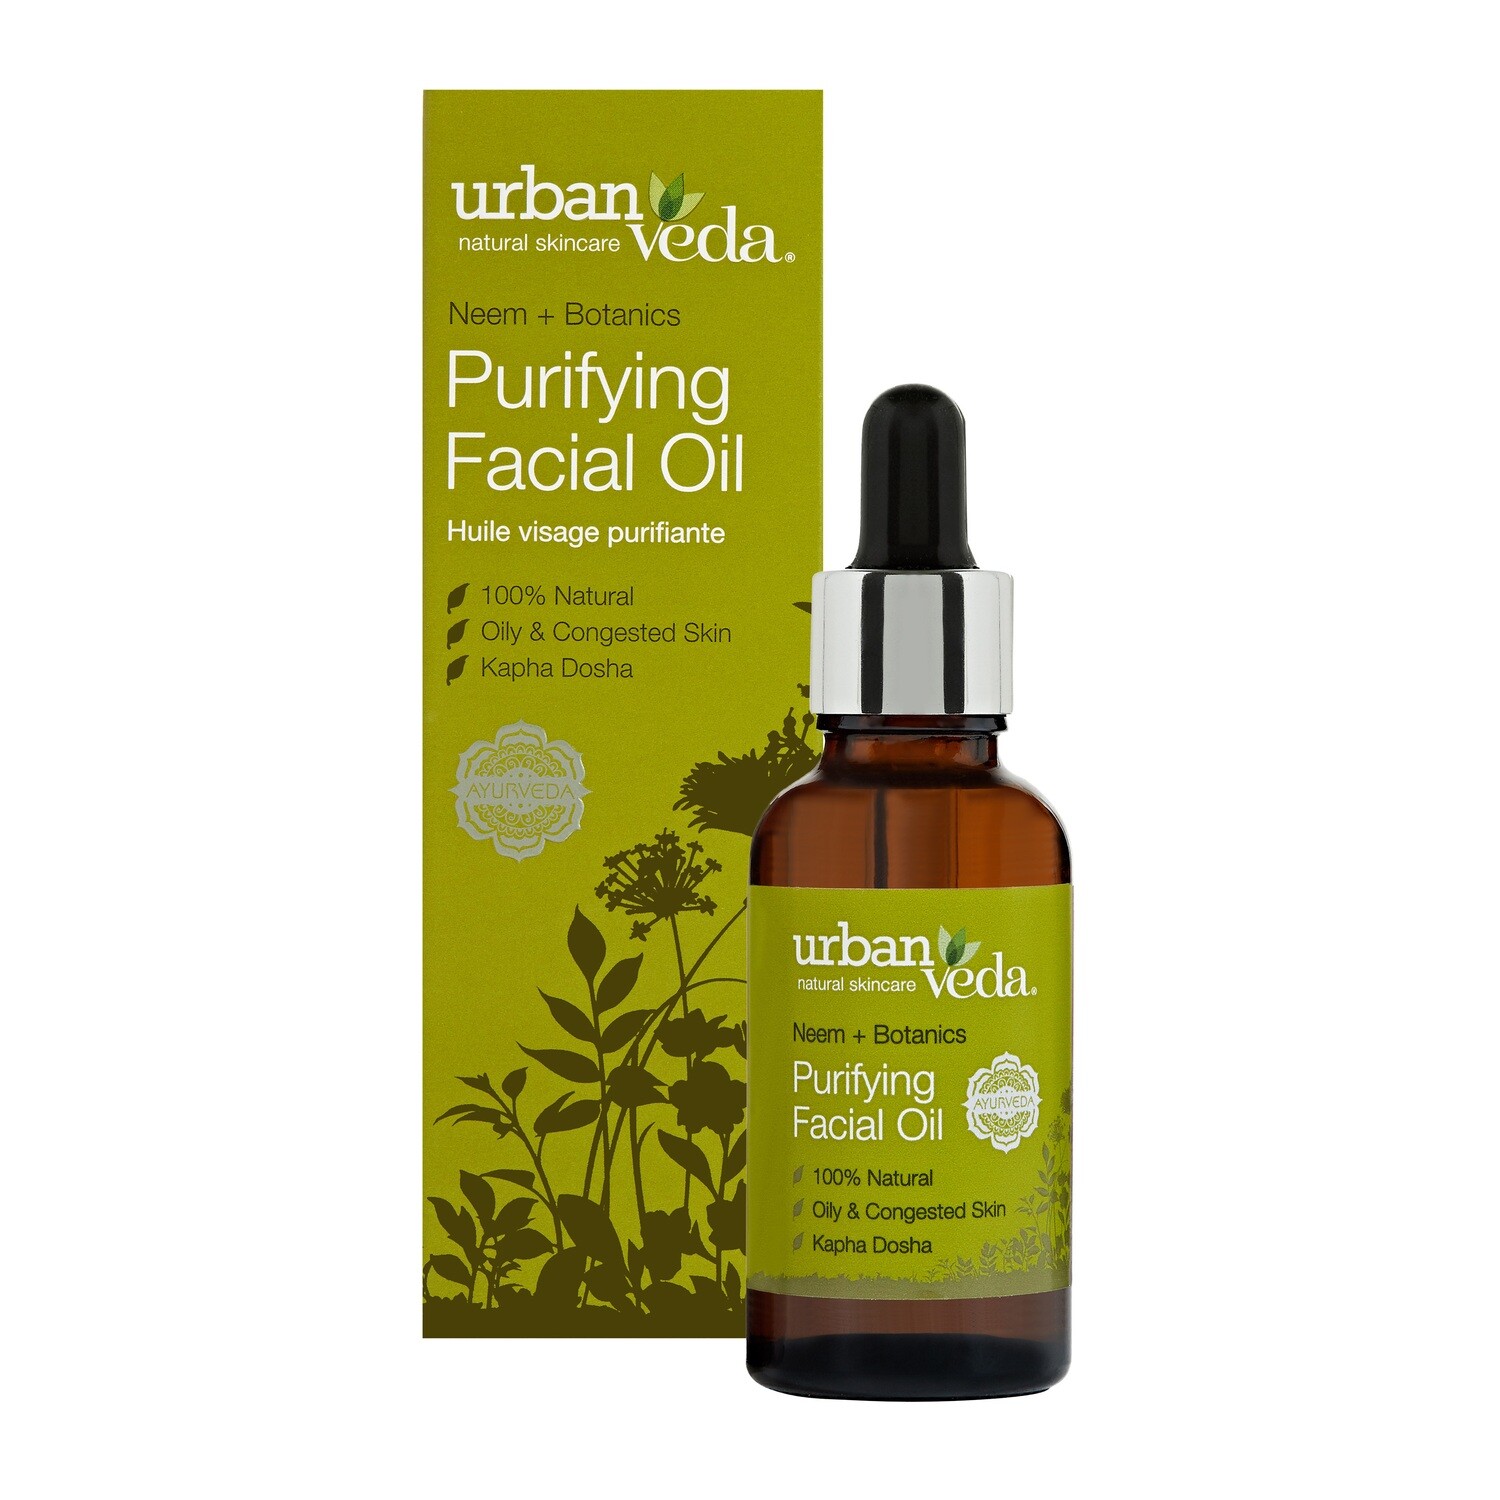 Purifying Facial Oil